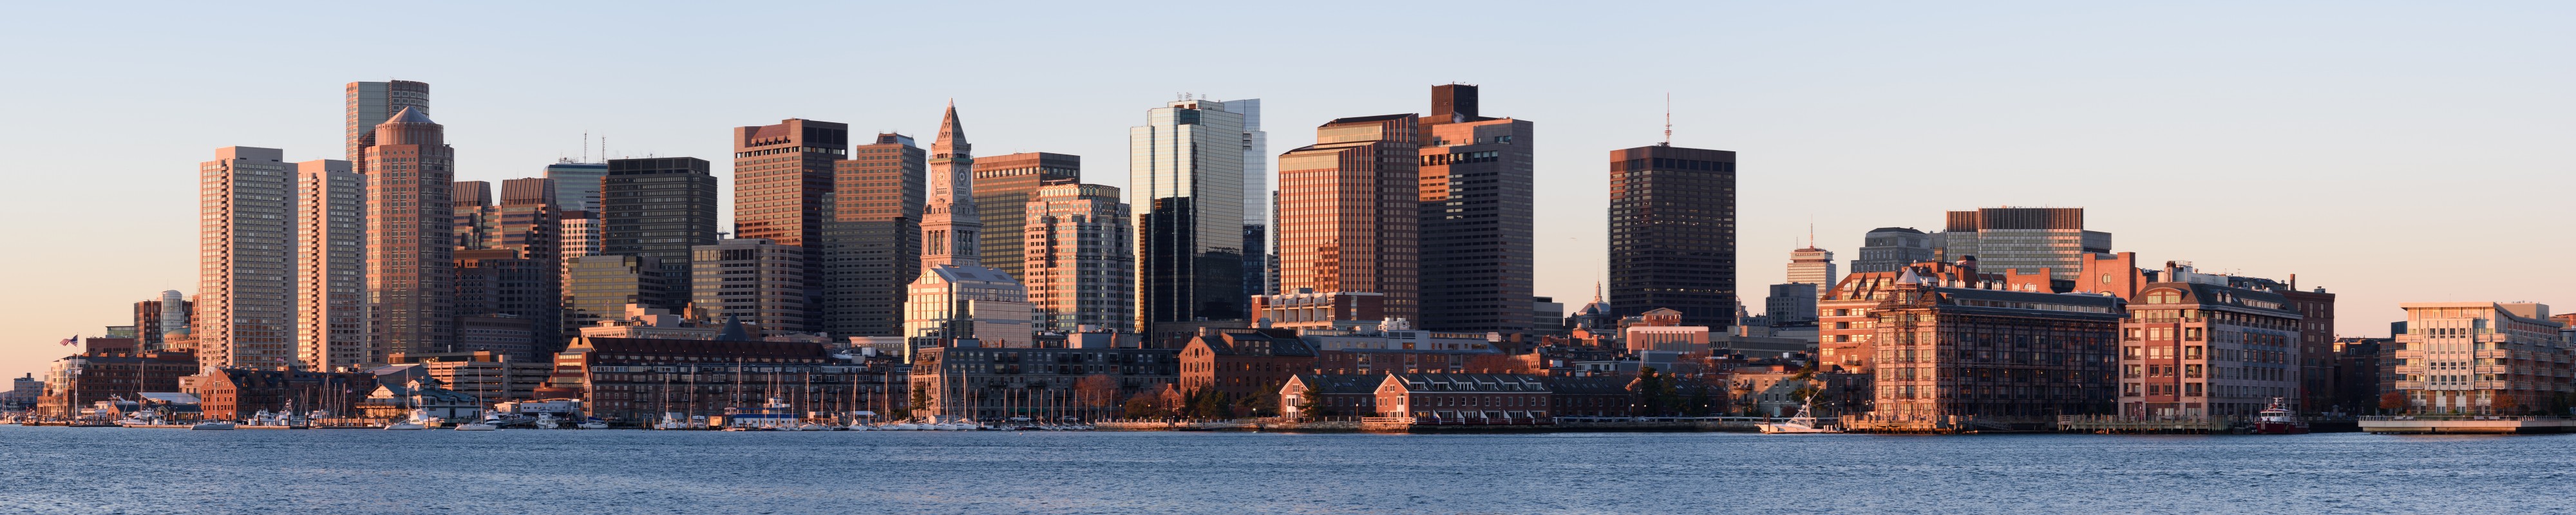 Boston skyline from East Boston November 2016 panorama 3